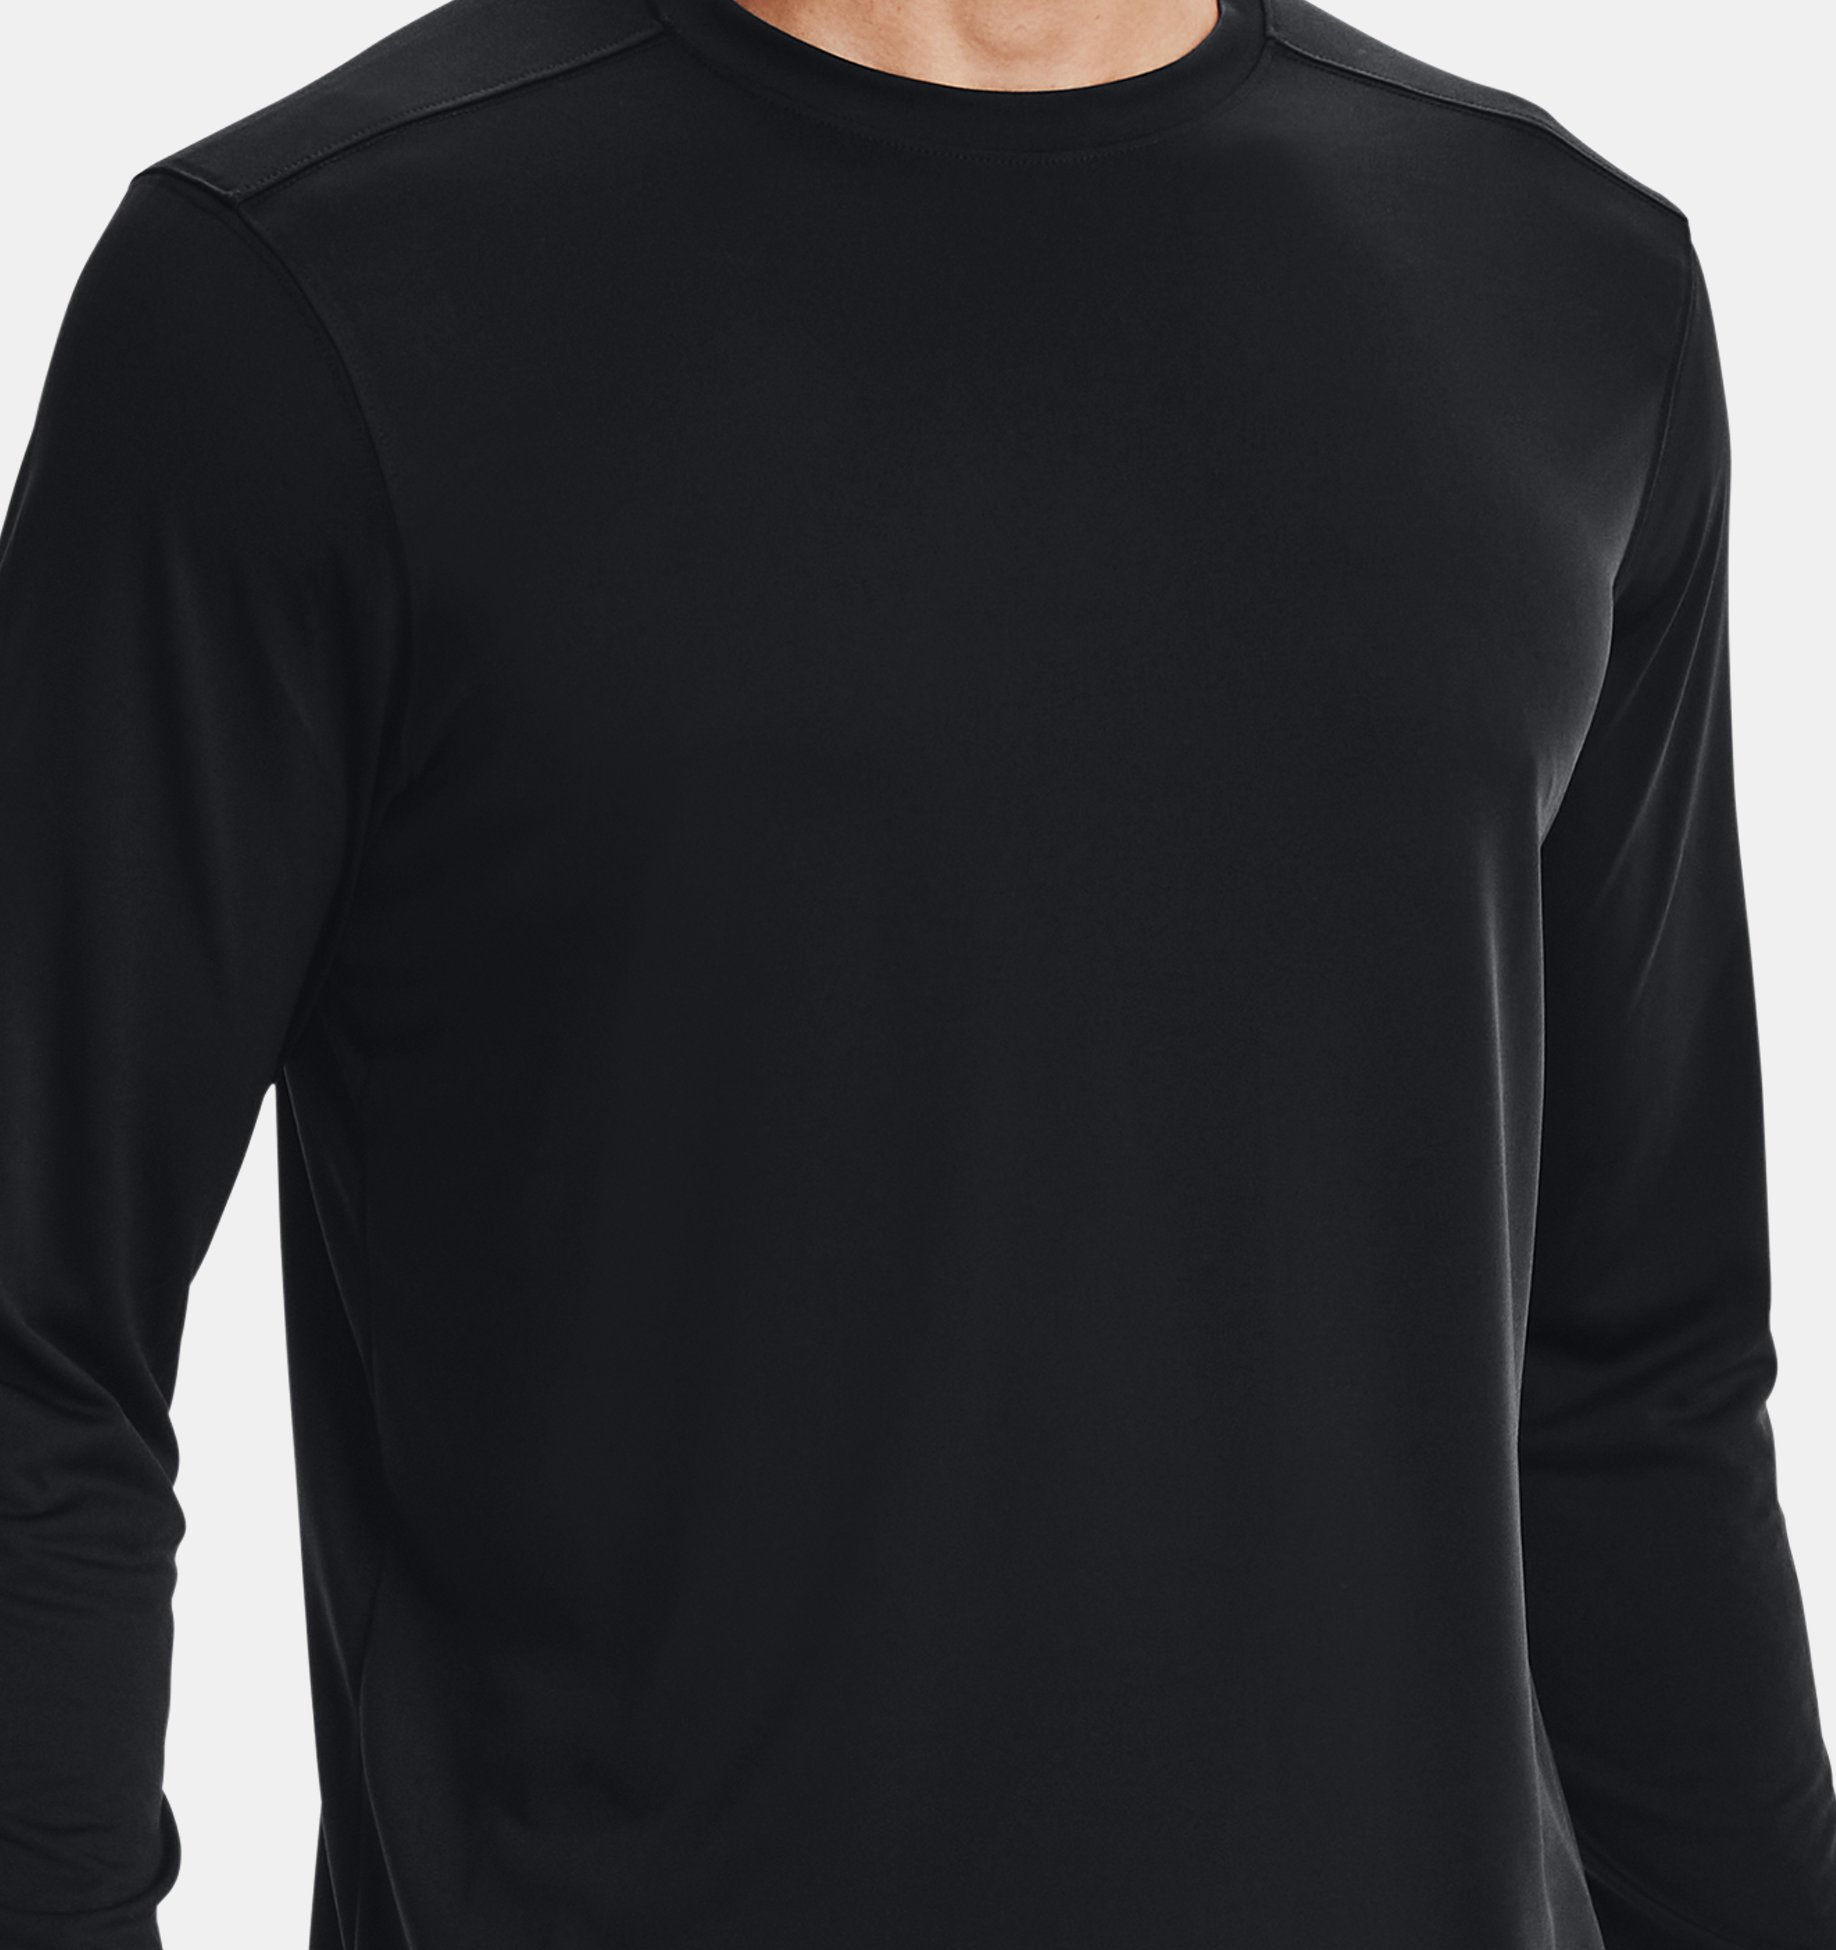 Under Armour Men's Tactical Tech Long Sleeve T-Shirt, Black/None